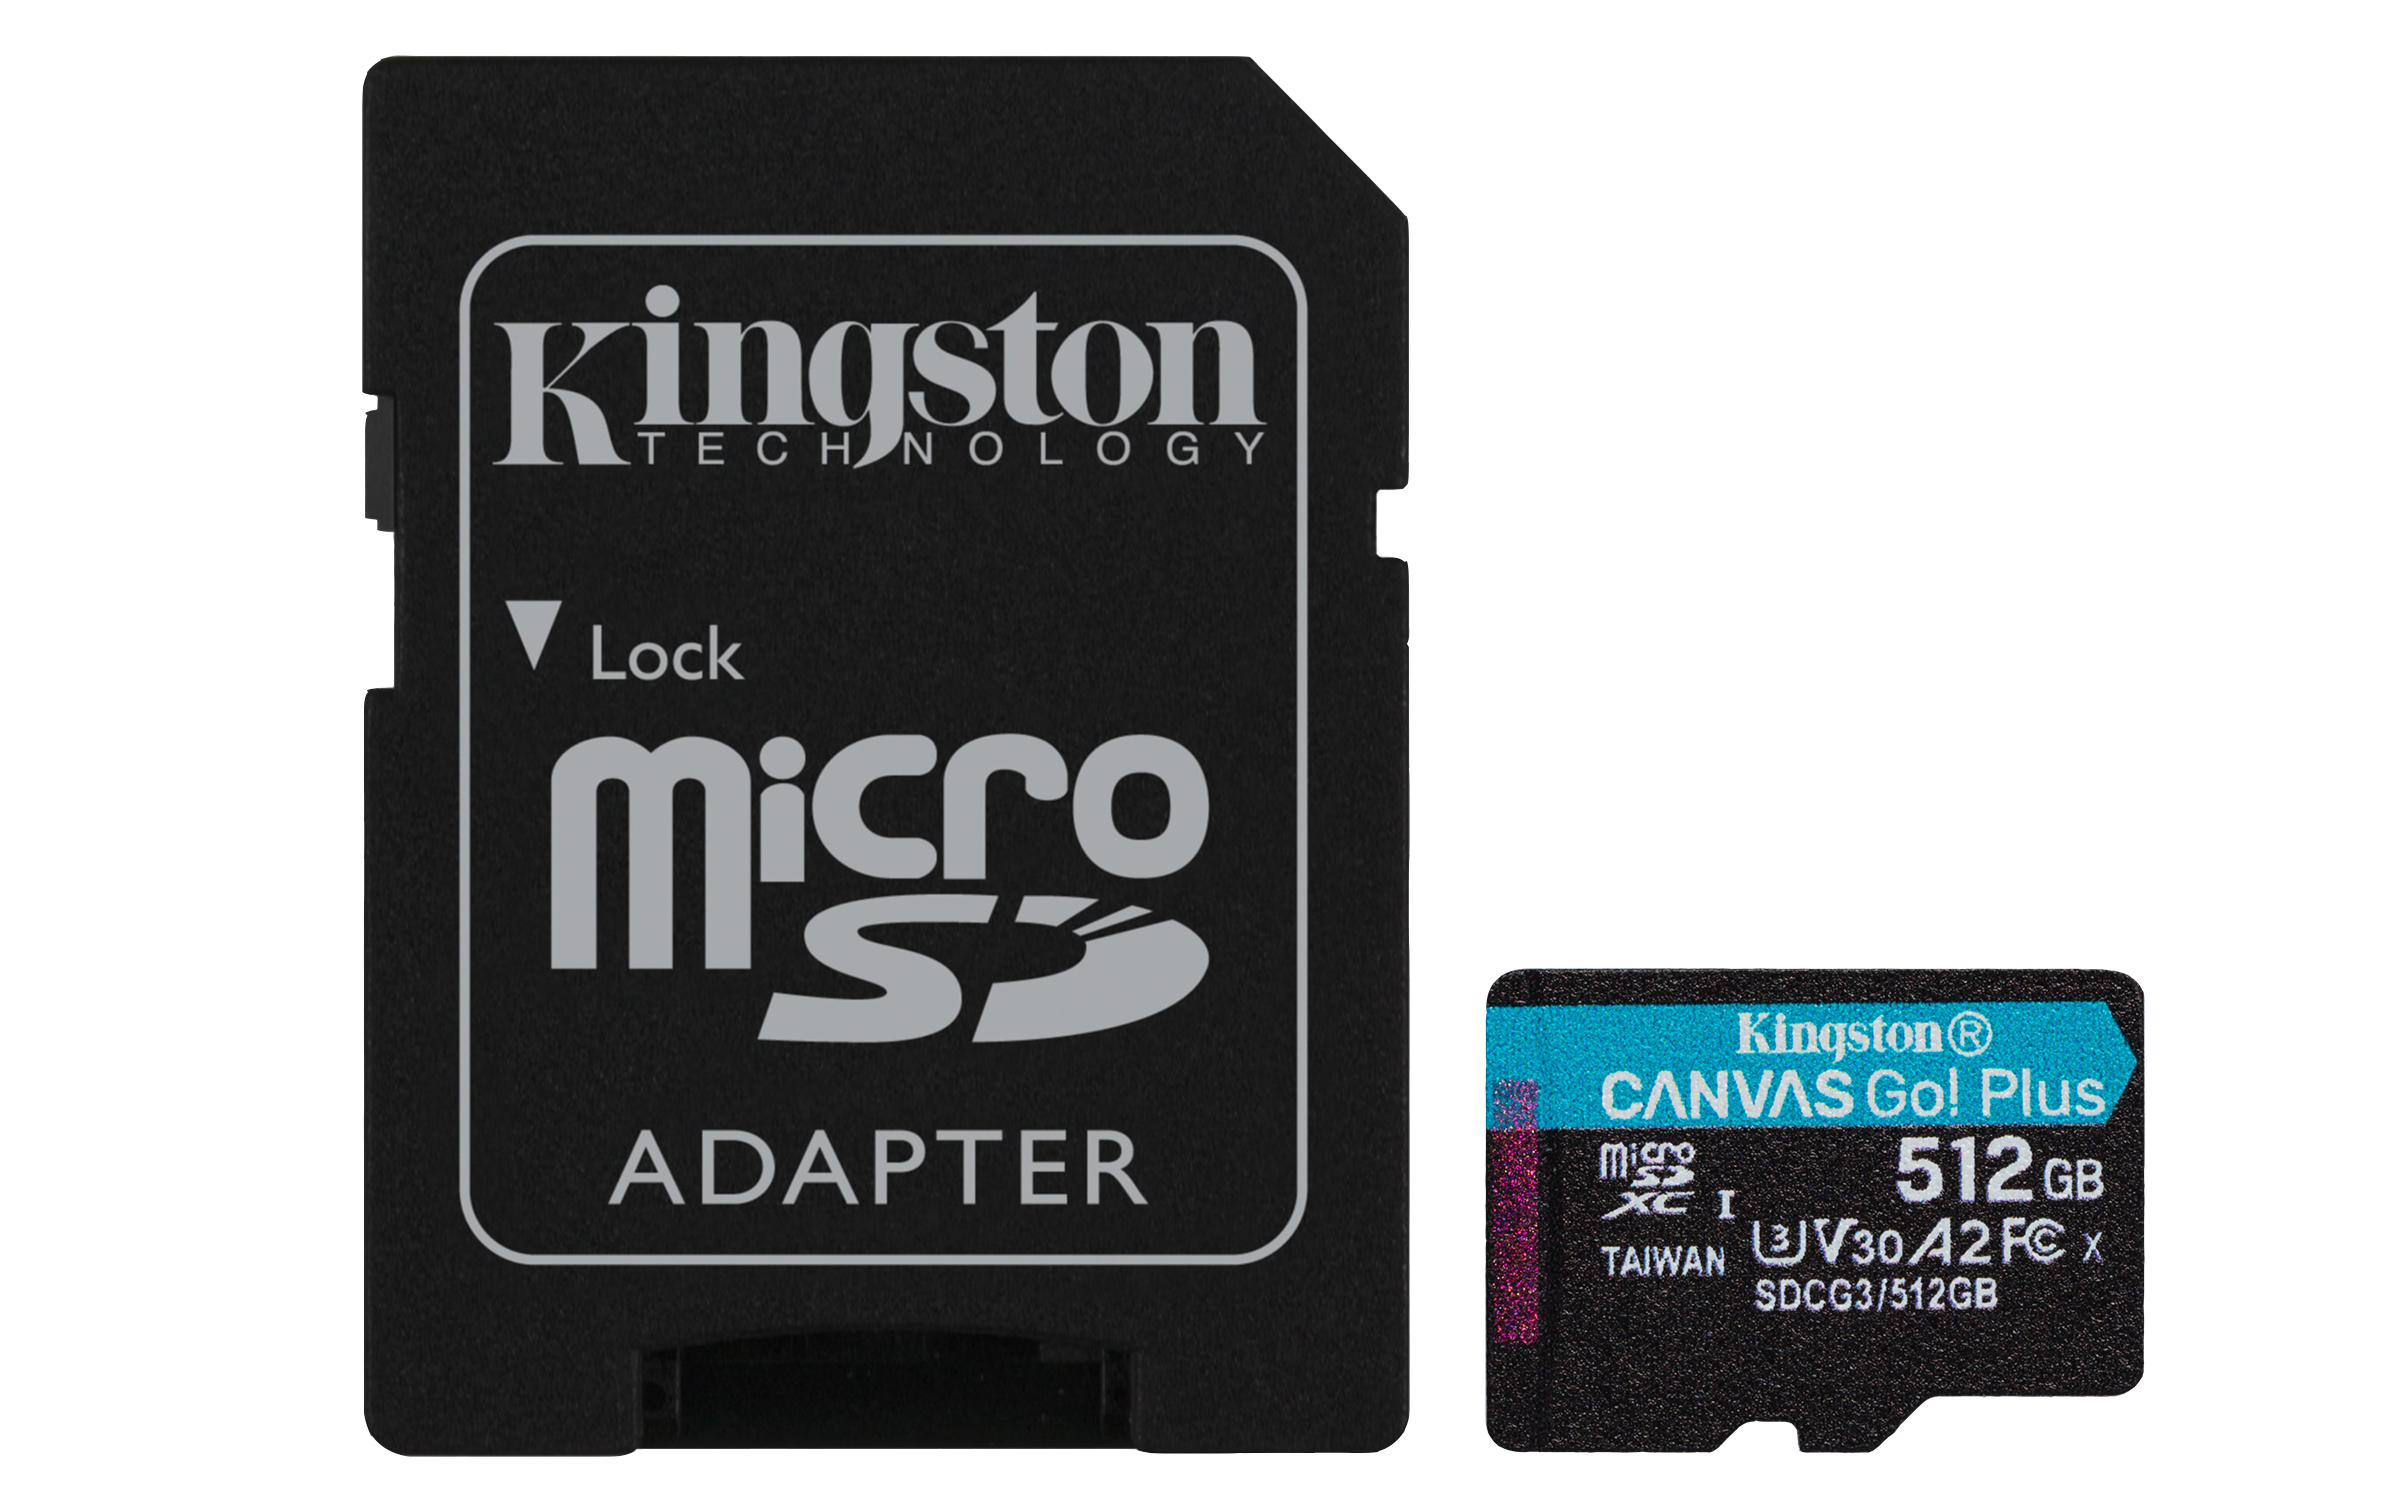 SD MICRO 512GB CL10 UHS-I CON ADATT 170MB/S LET.90MB/S SCRIT.KINGSTON